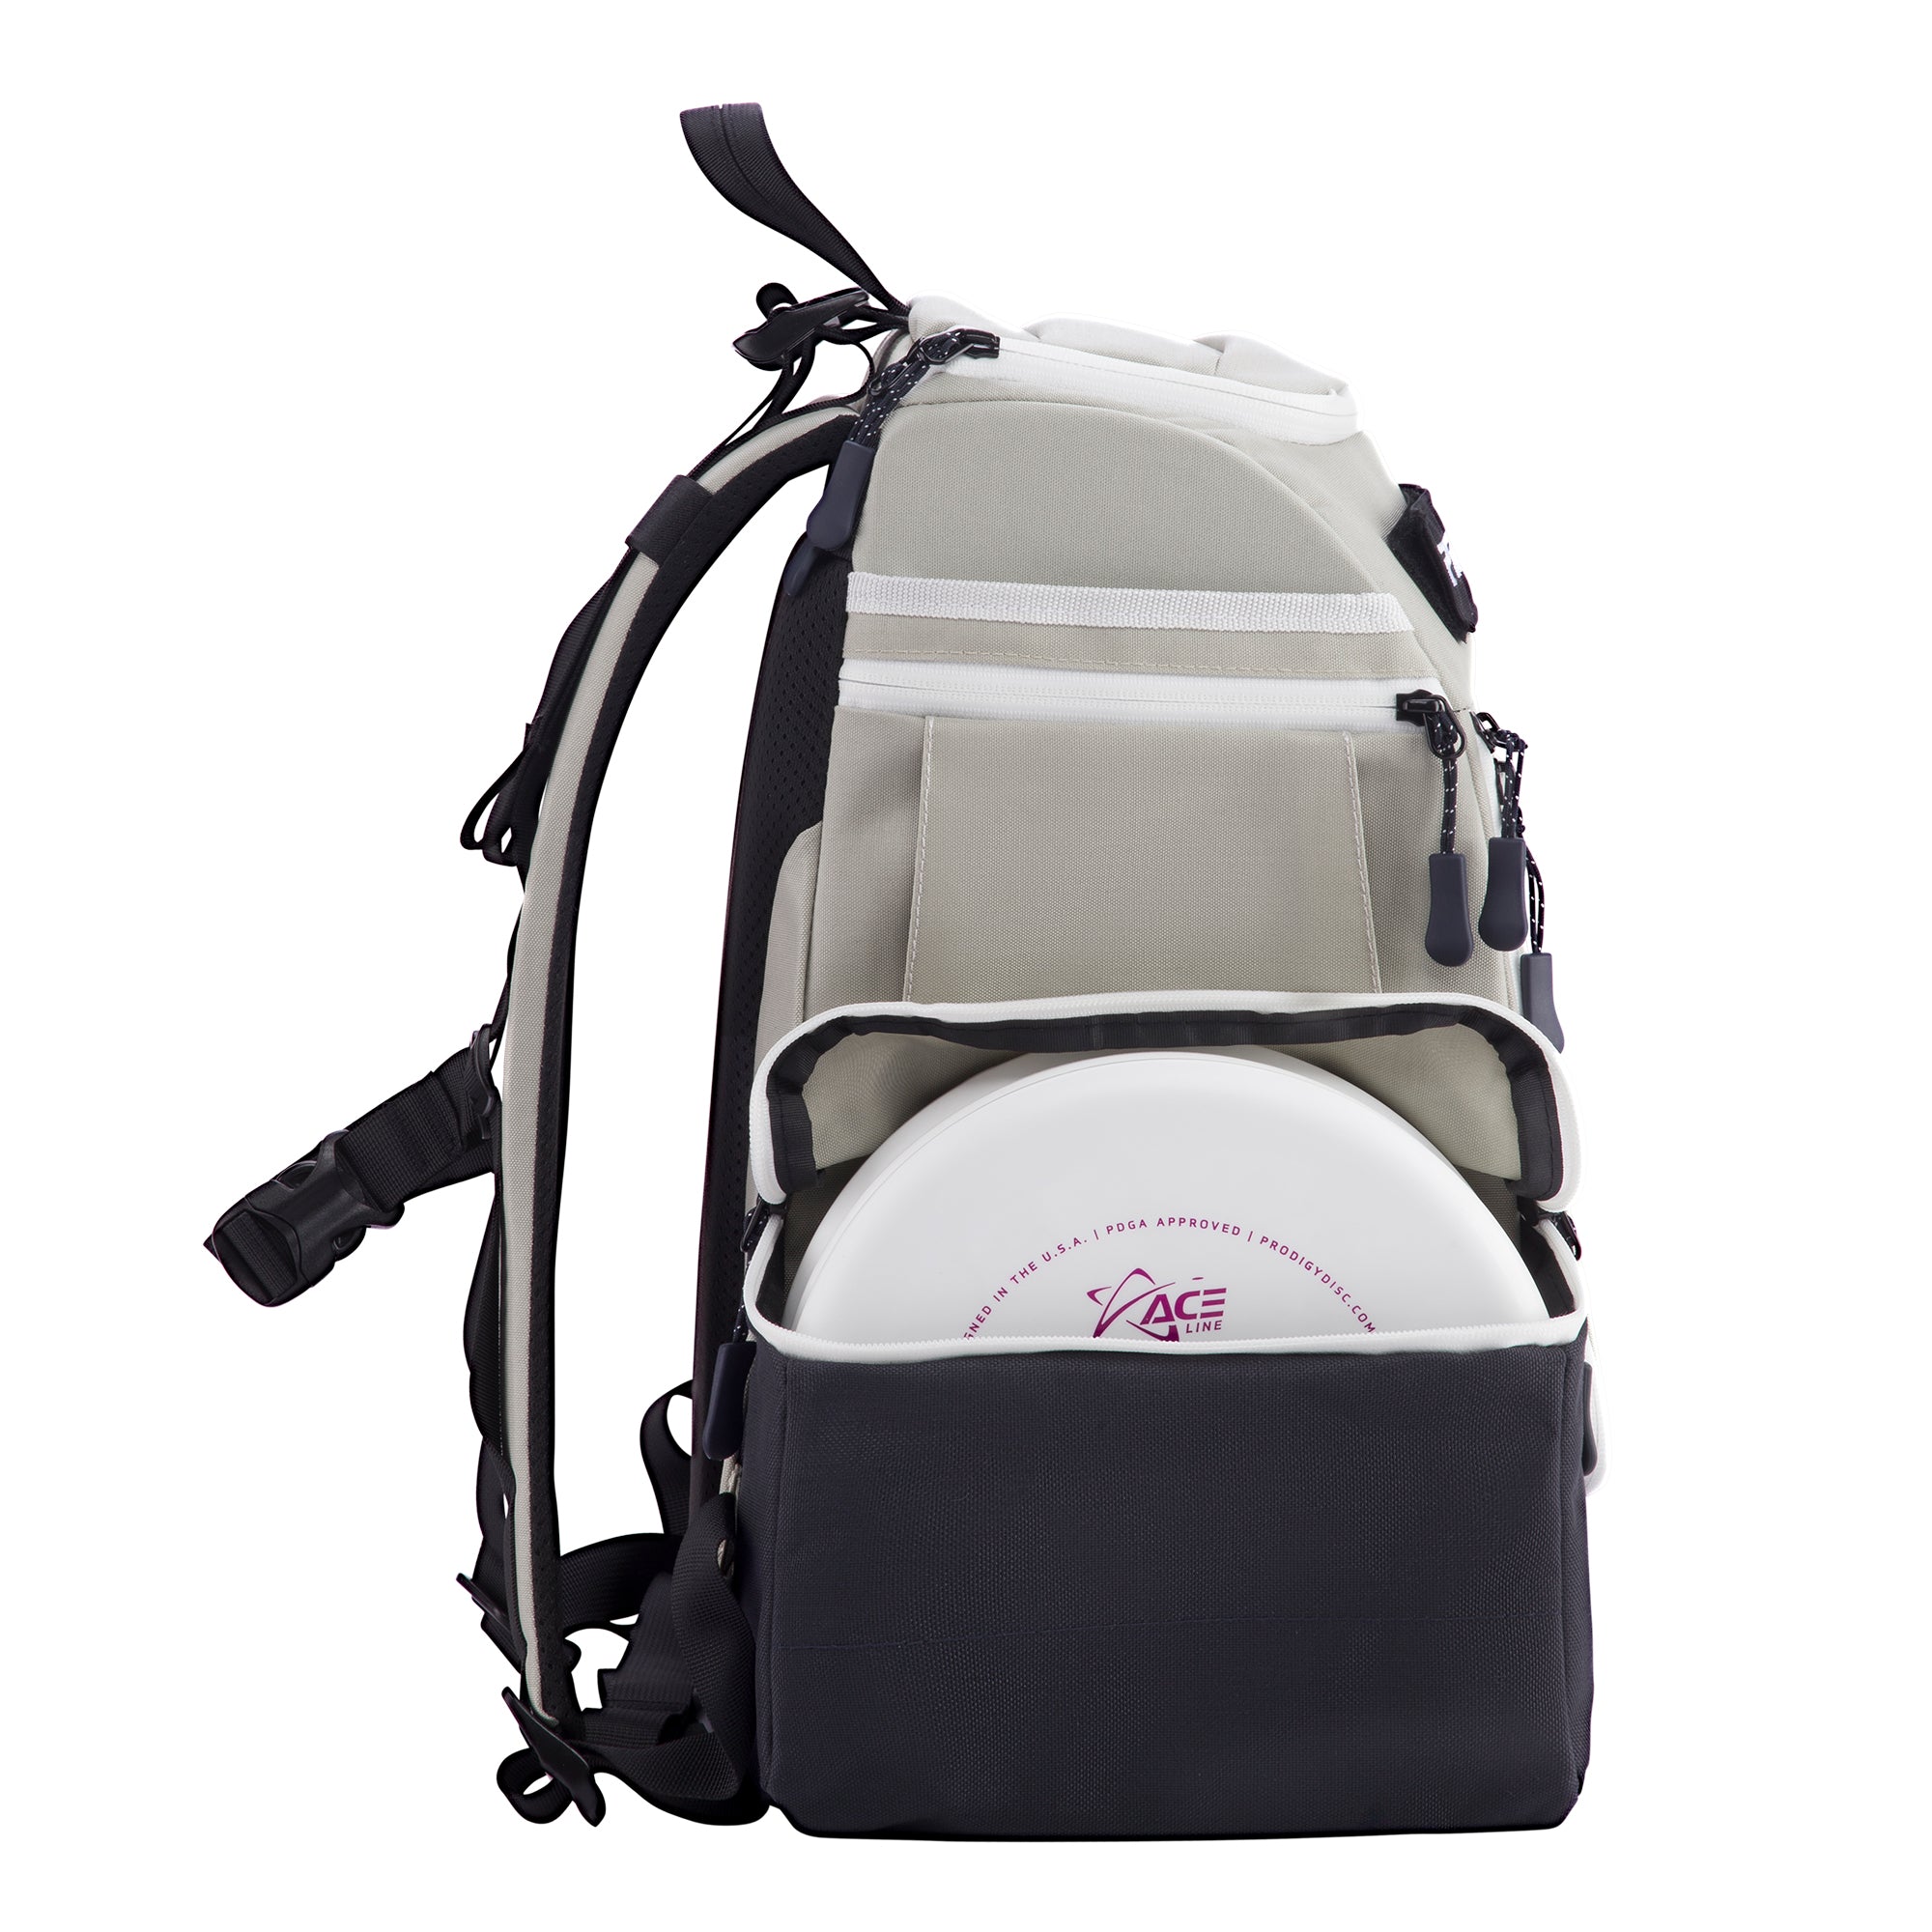 Prodigy Apex Backpack Disc Golf Bag